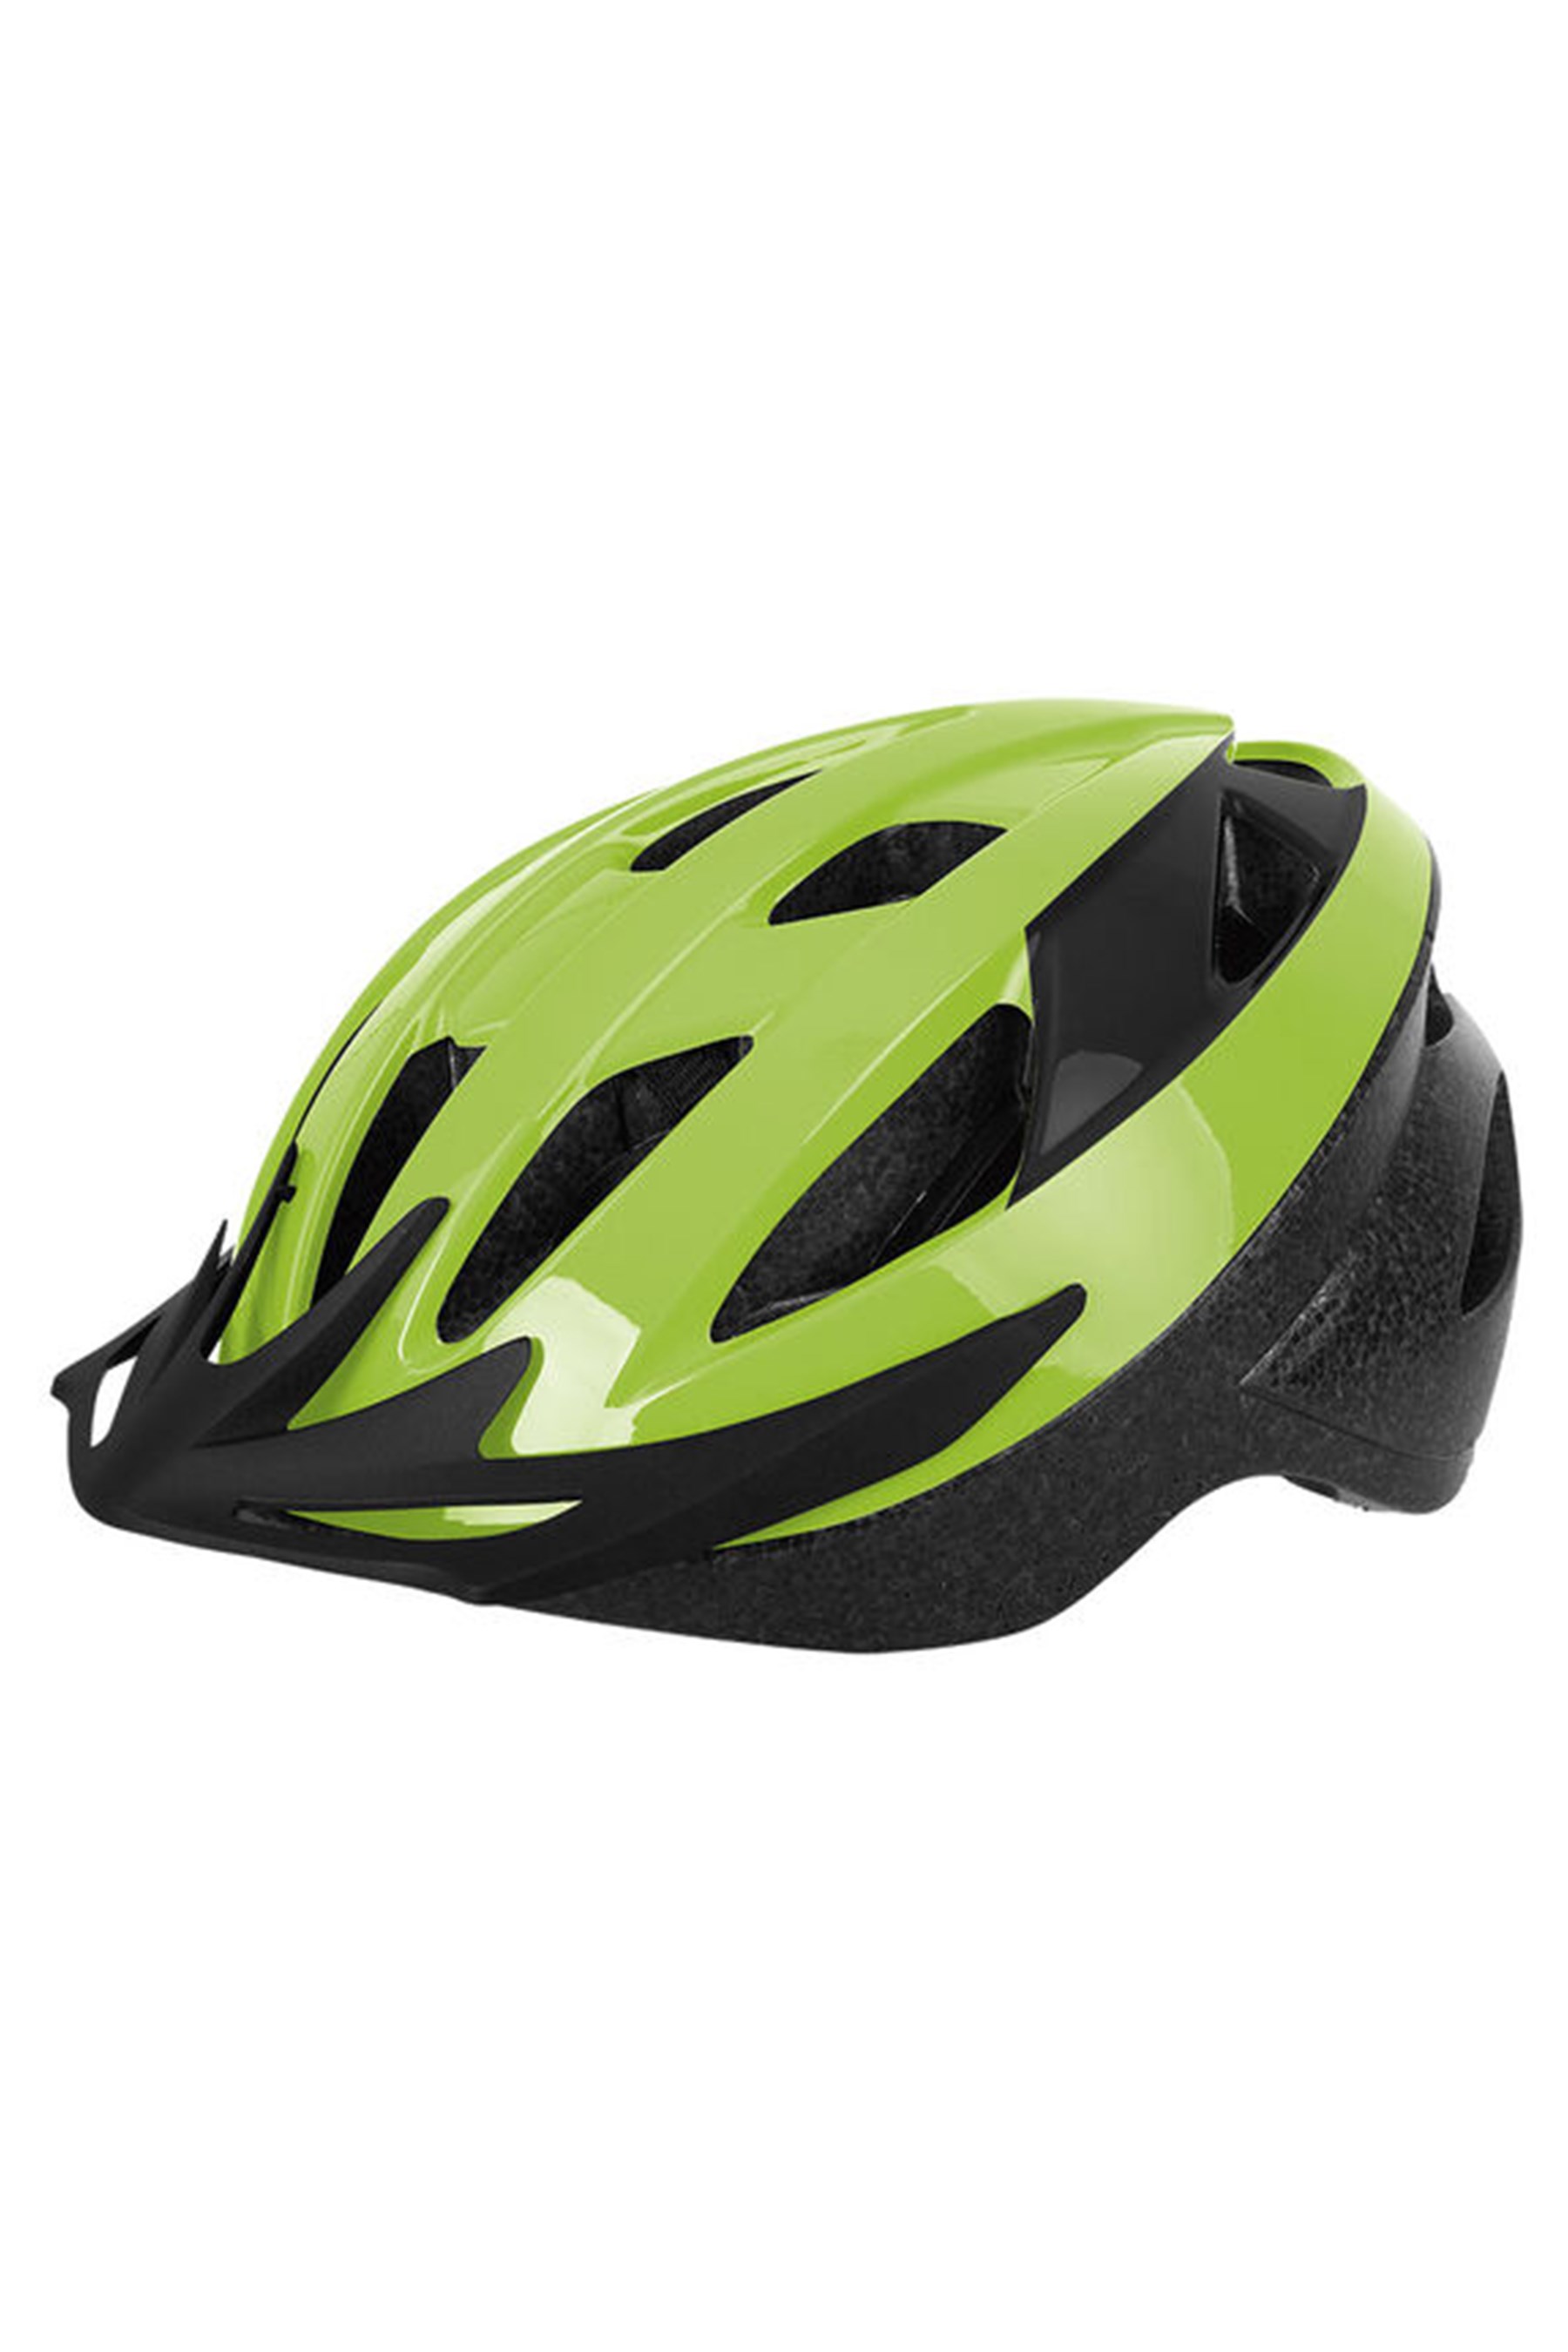 Neat Adult Bicycle Helmet -